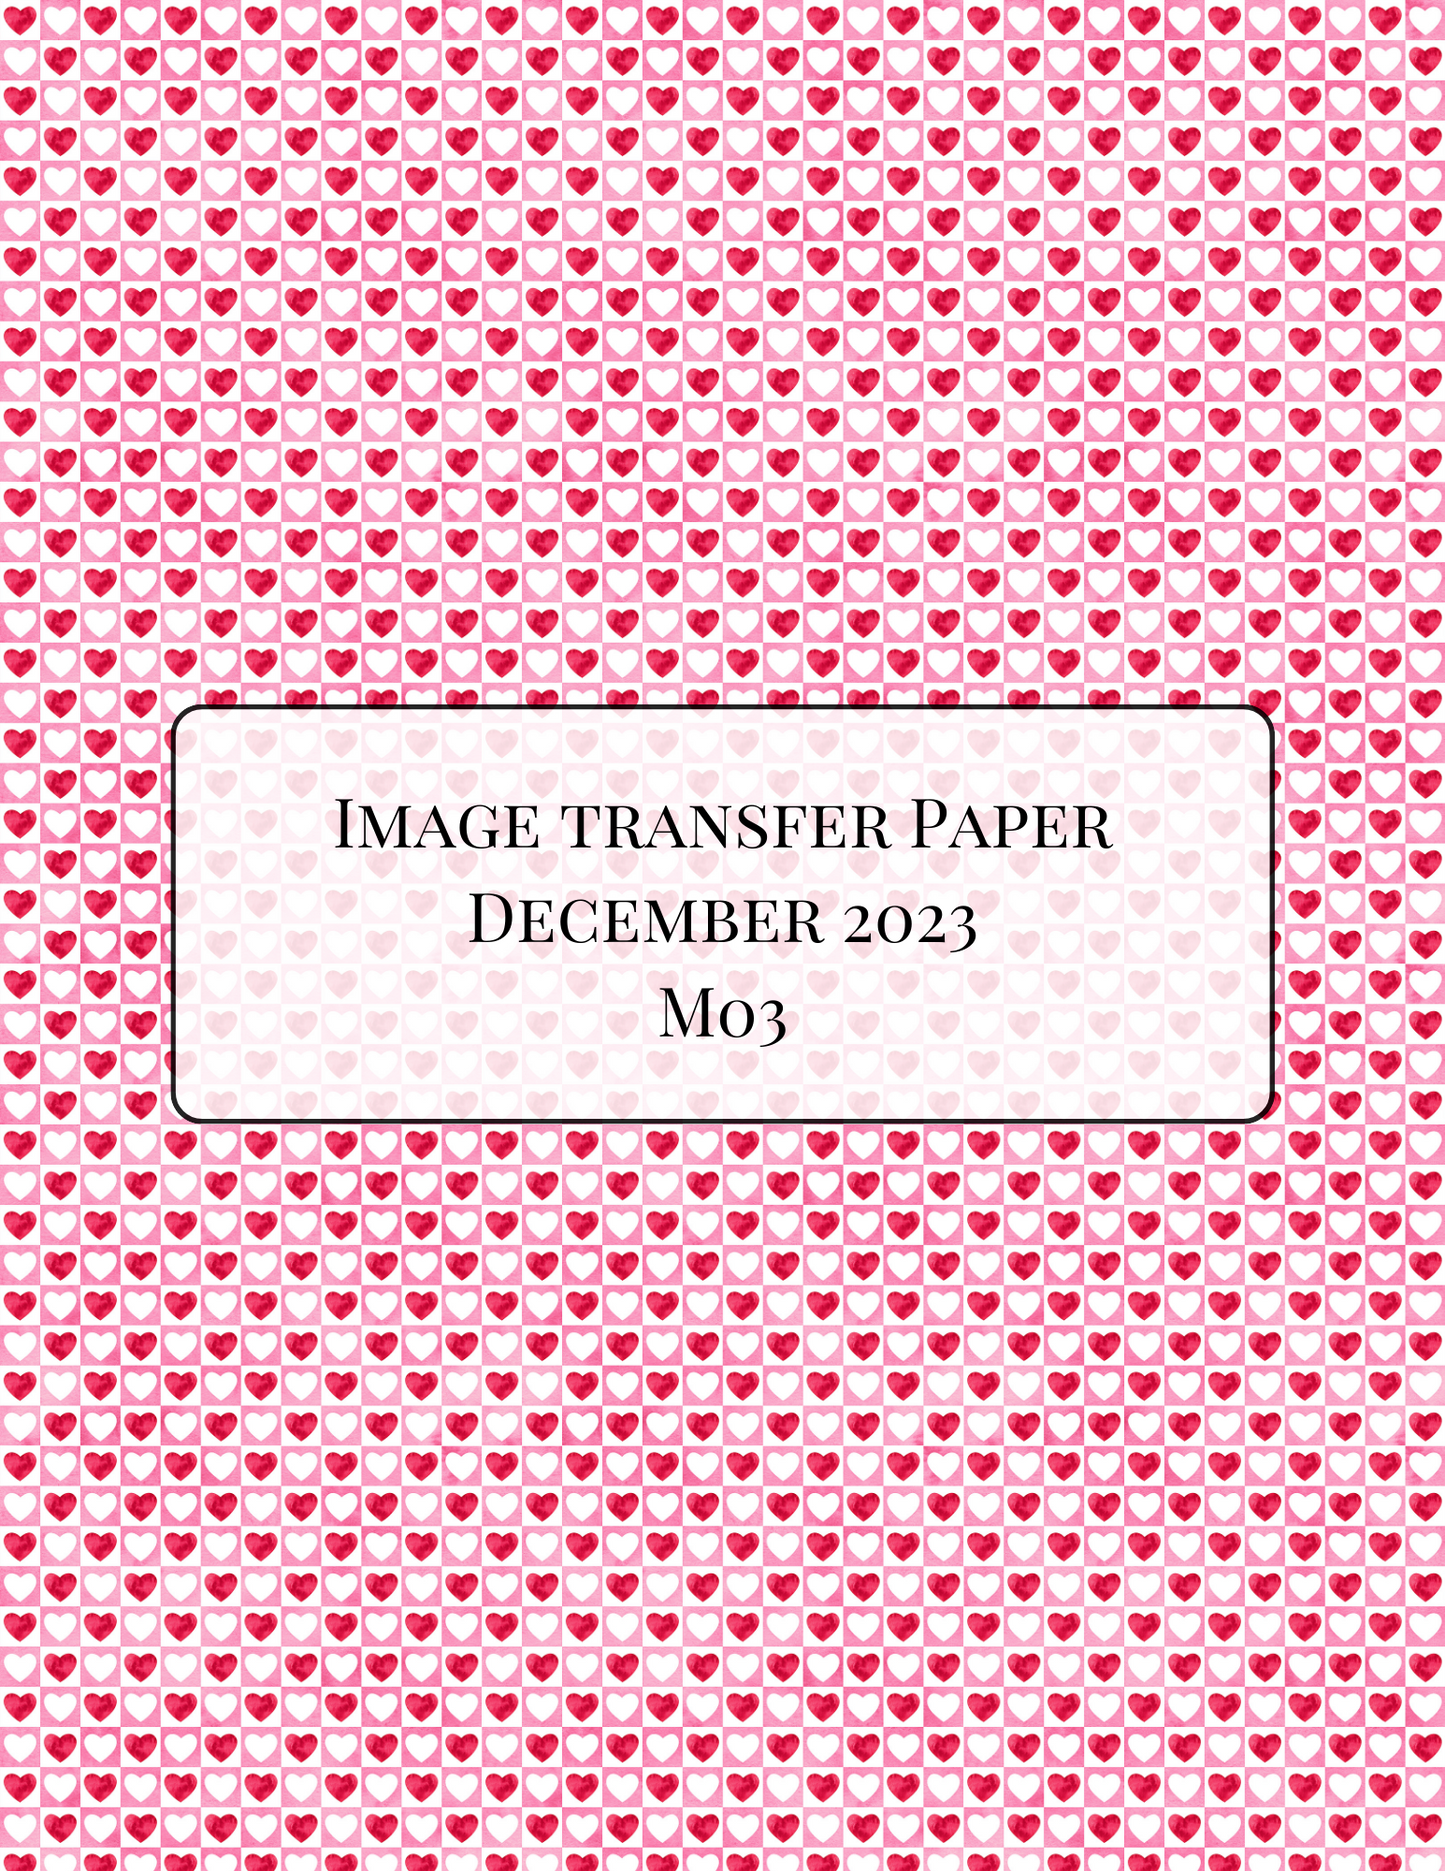 M03 Transfer Paper - December 2023 Launch